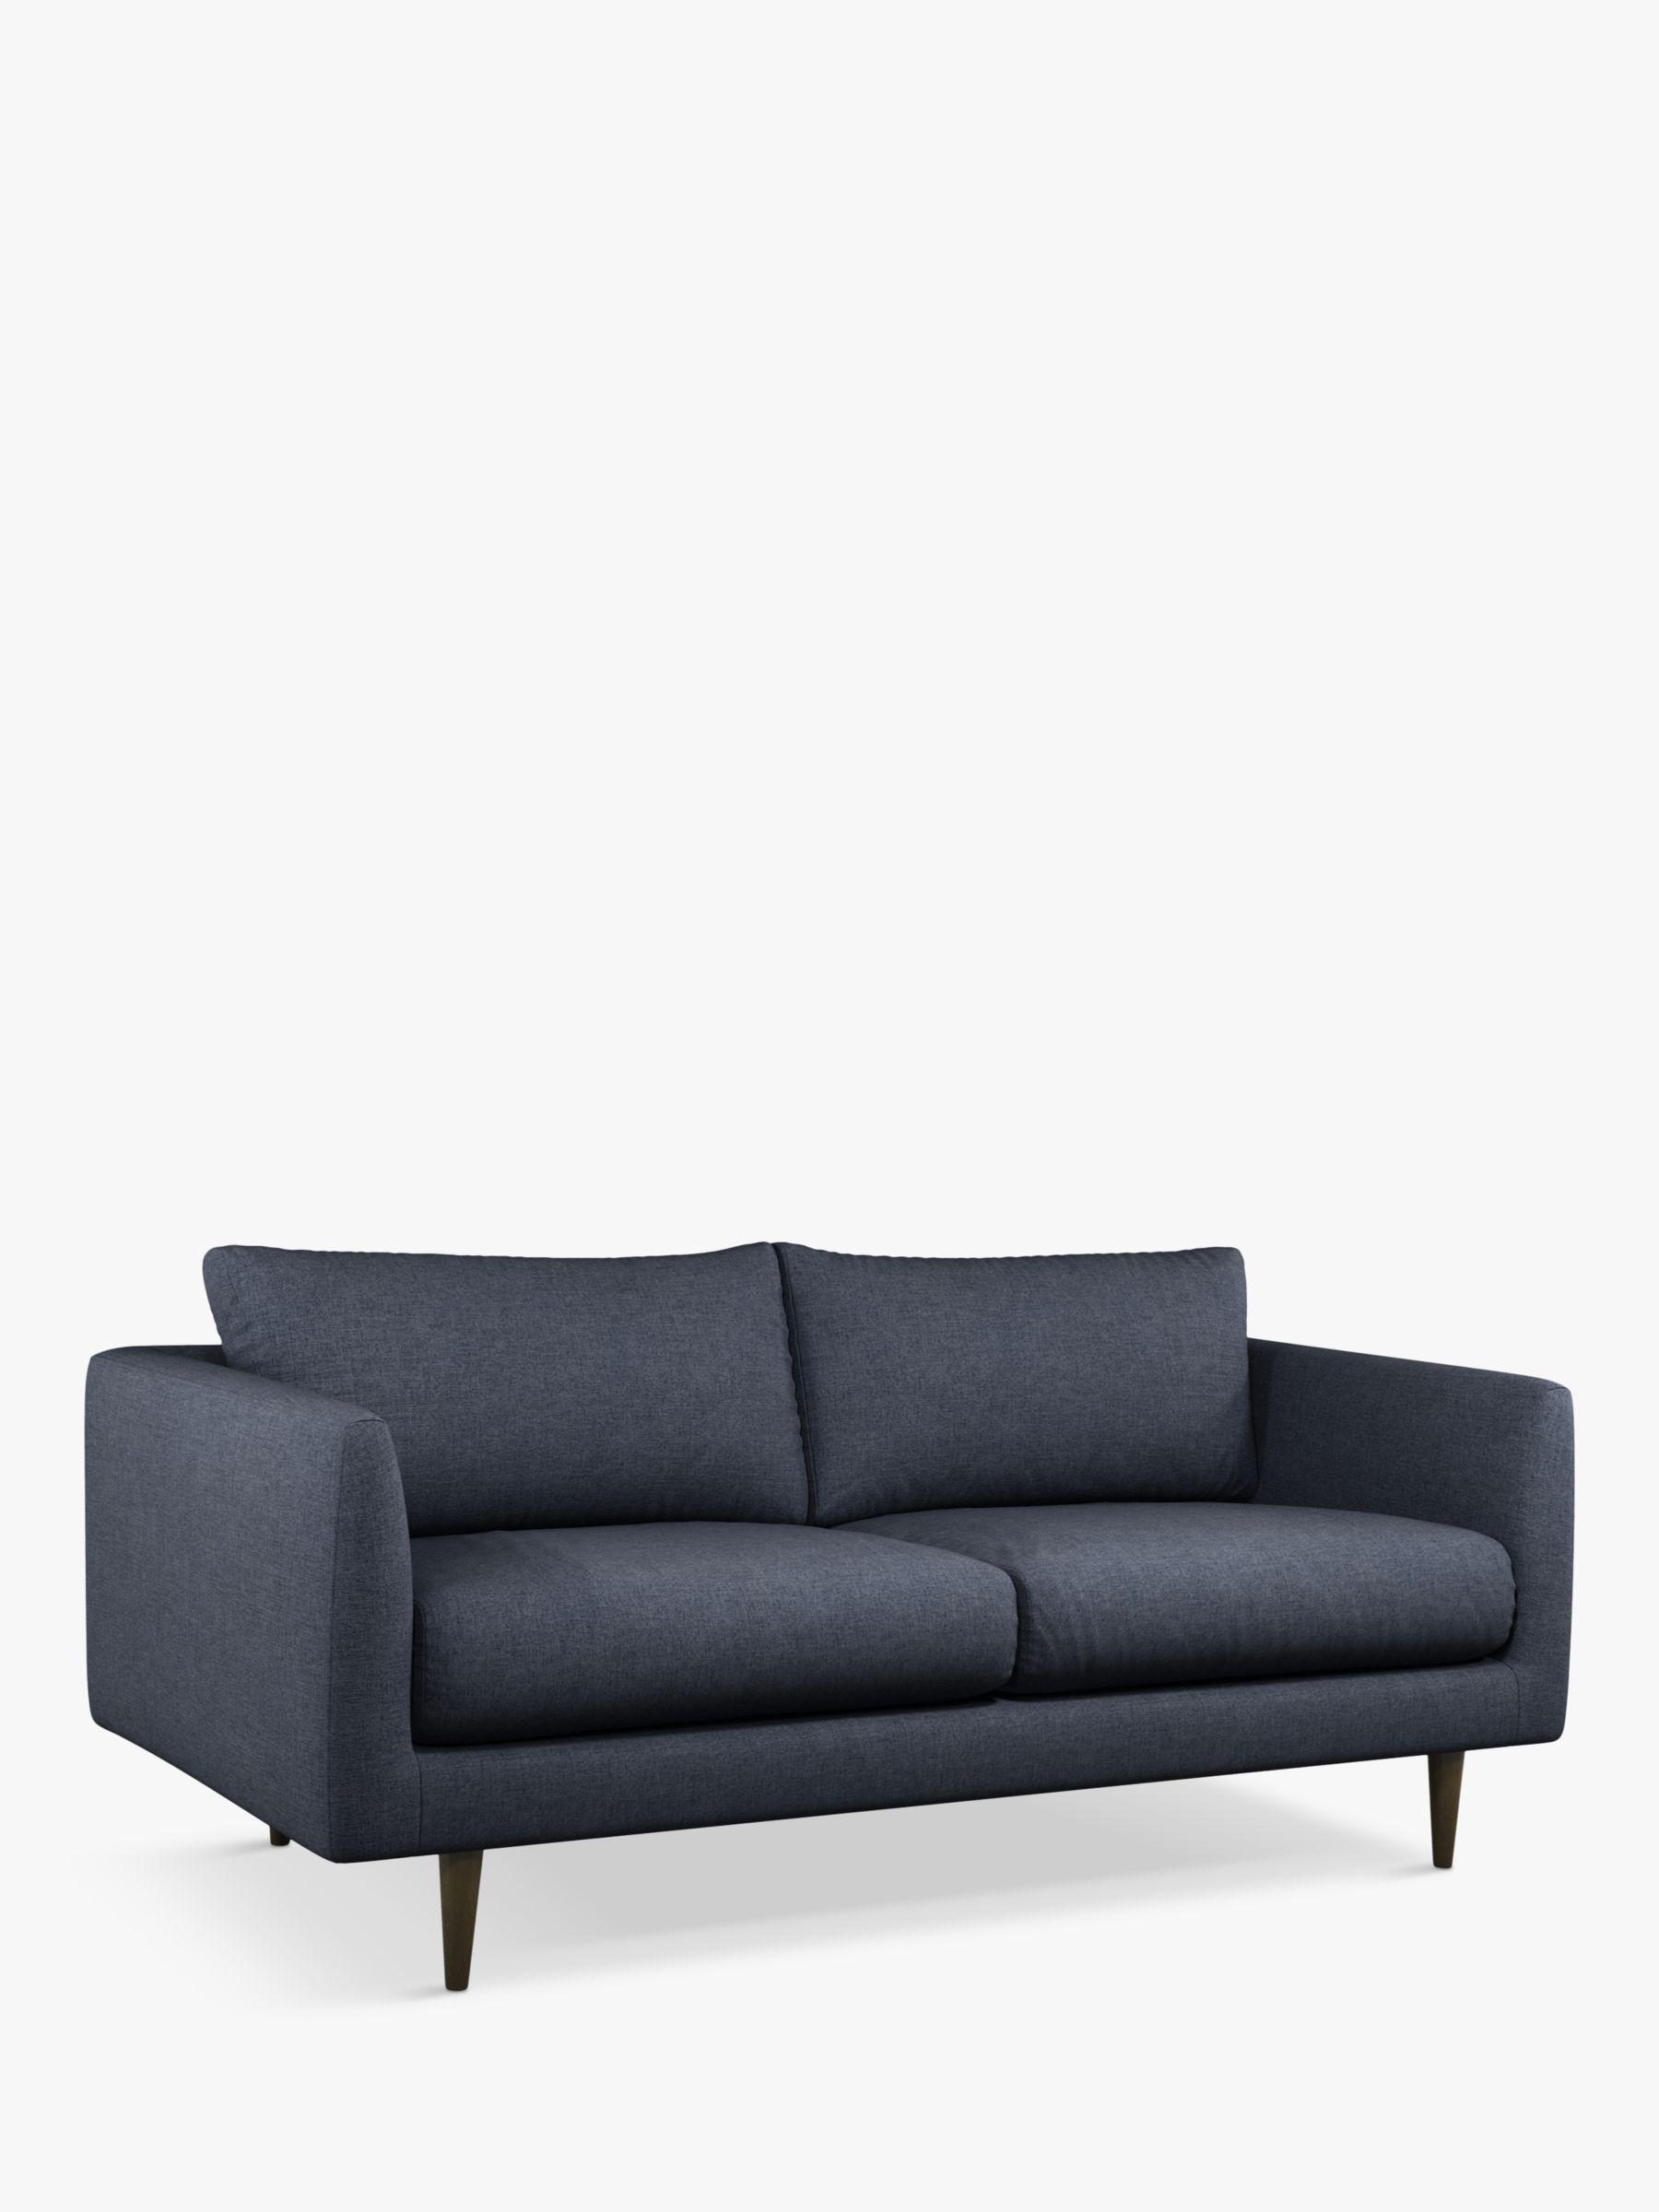 Latimer Range, Swoon + John Lewis Latimer Medium 2 Seater Sofa, Dark Leg, Denim Weave